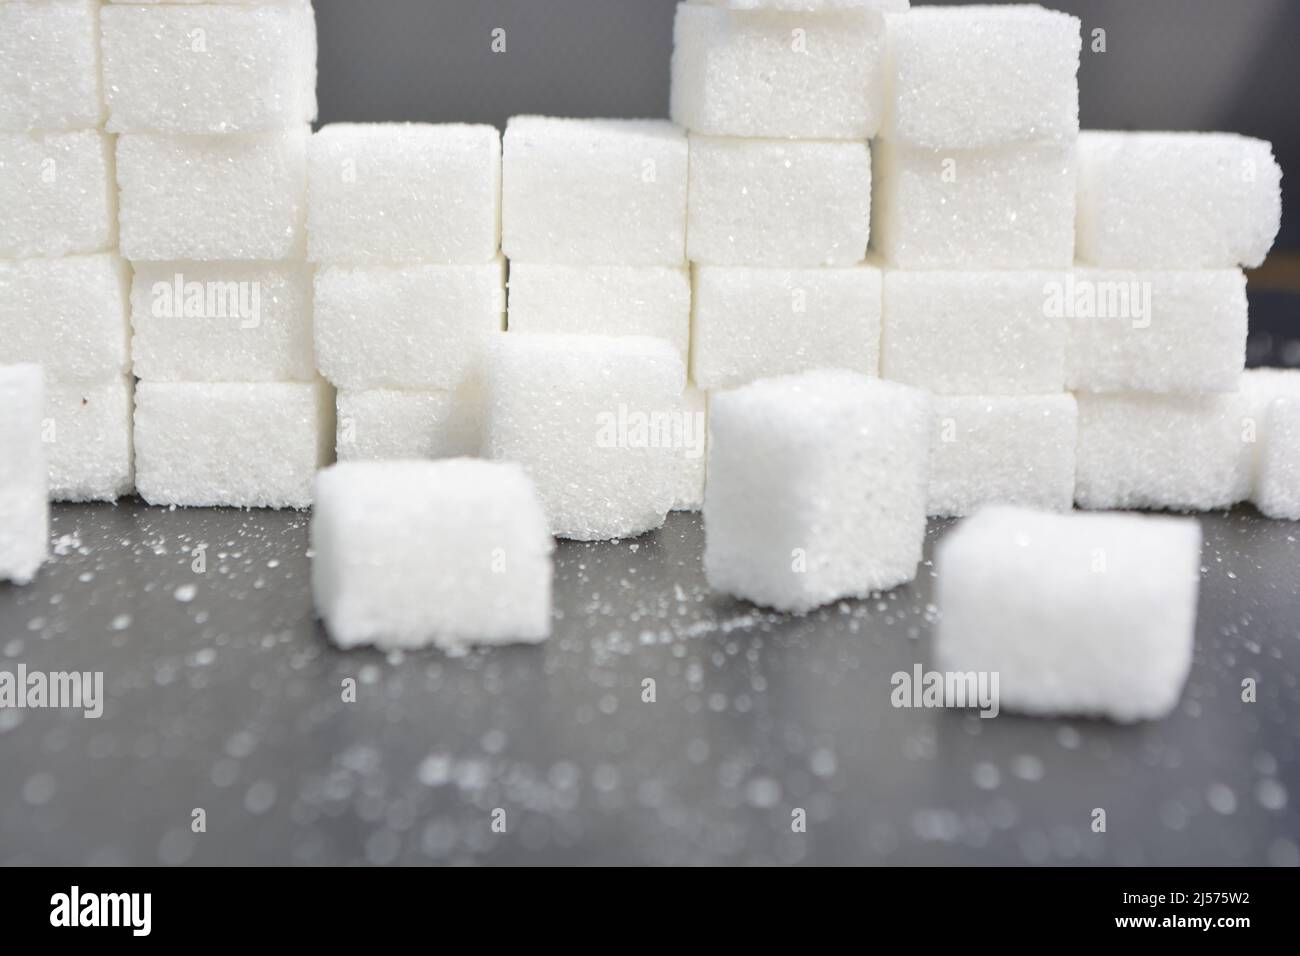 Passi fatti da cubetti di zucchero. Mucchio di cubetti di zucchero su una superficie grigia lucida, piramide di zucchero. Foto Stock